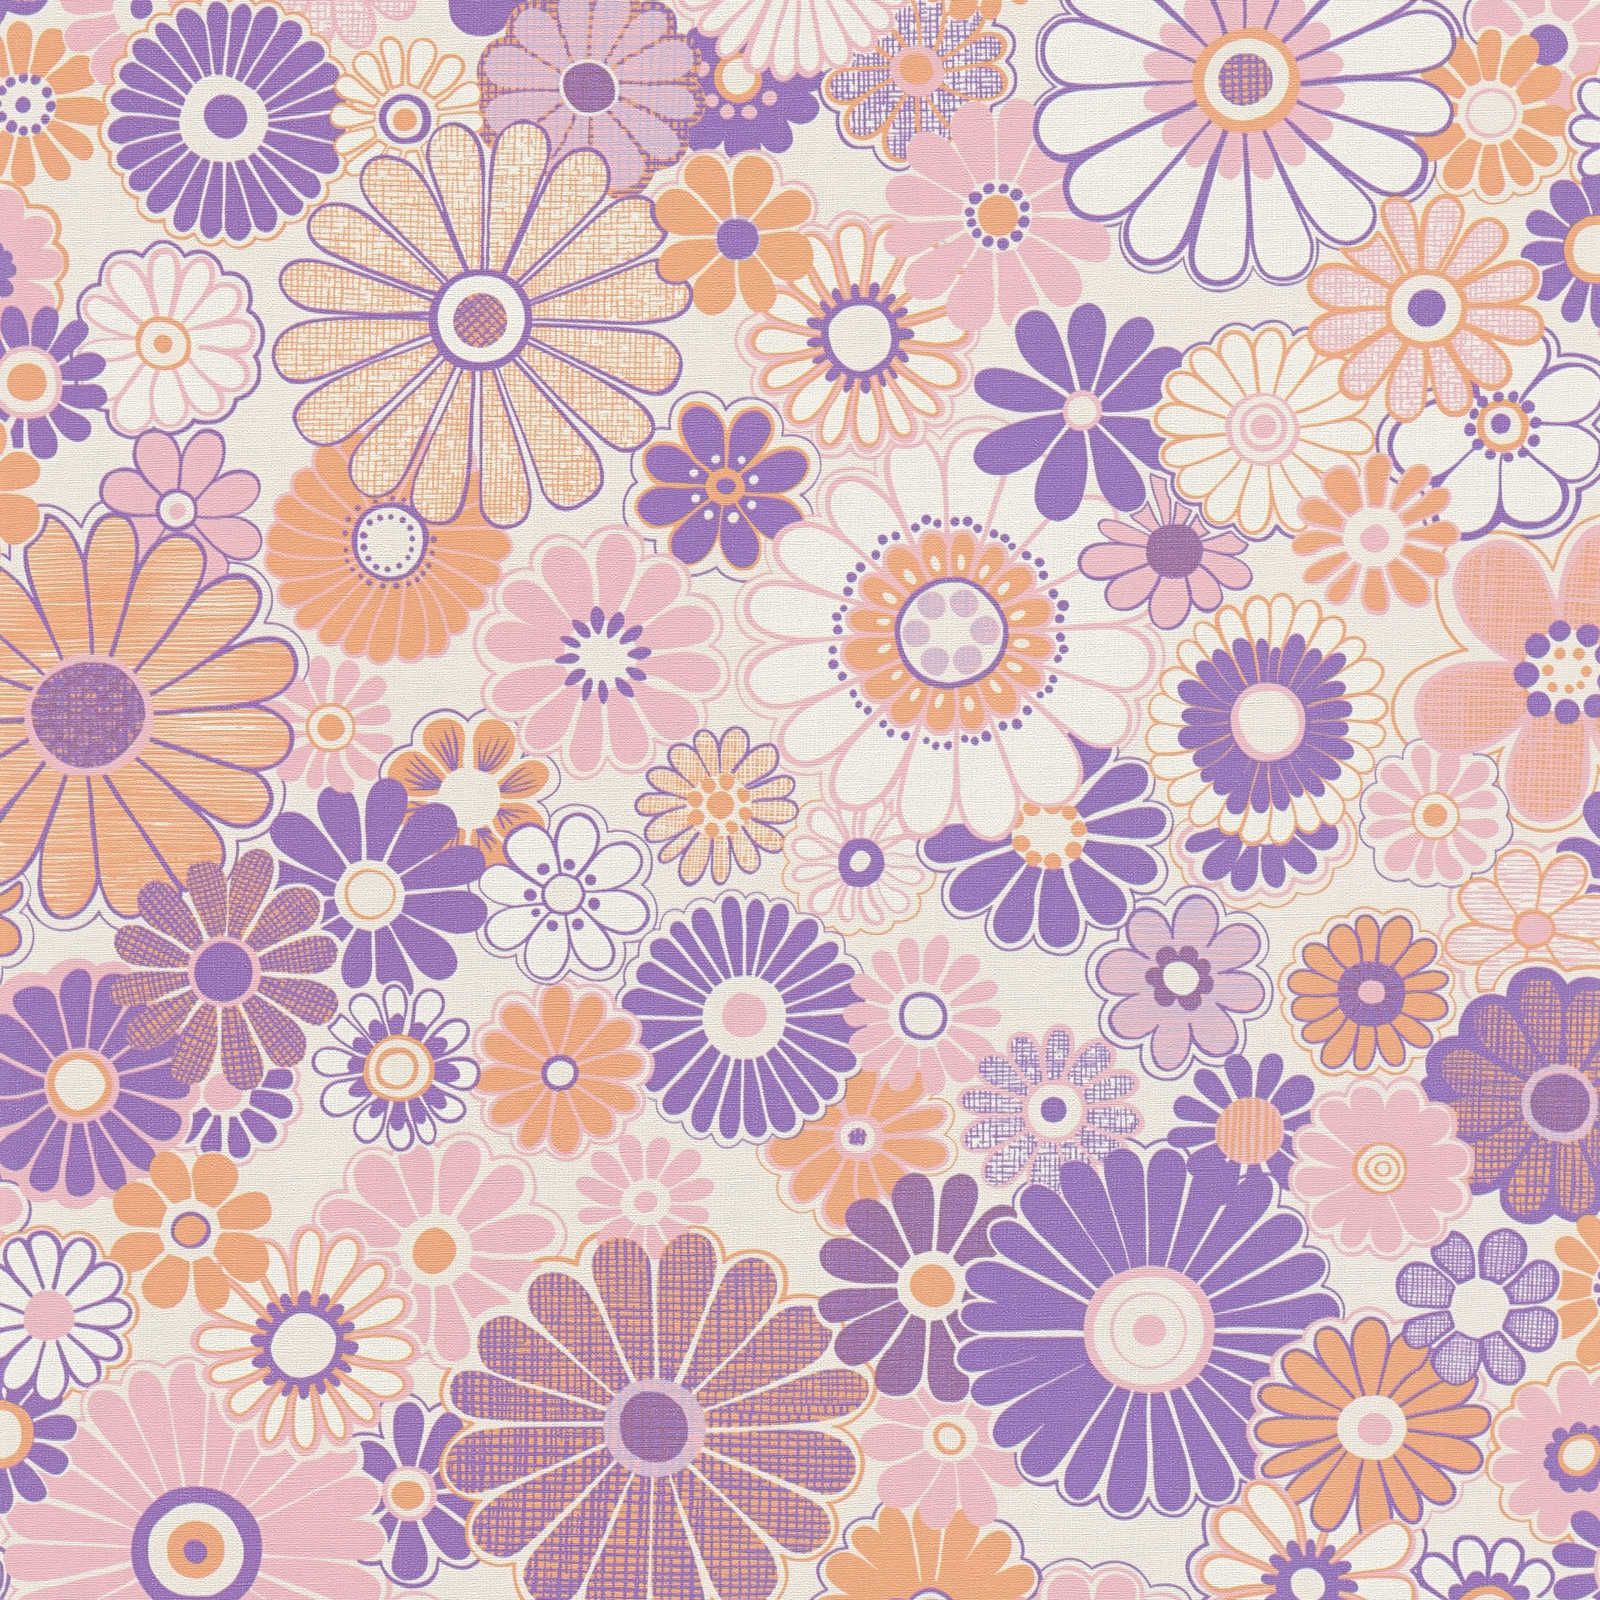             Papel pintado no tejido de textura ligera con motivos florales - morado, naranja, rosa
        